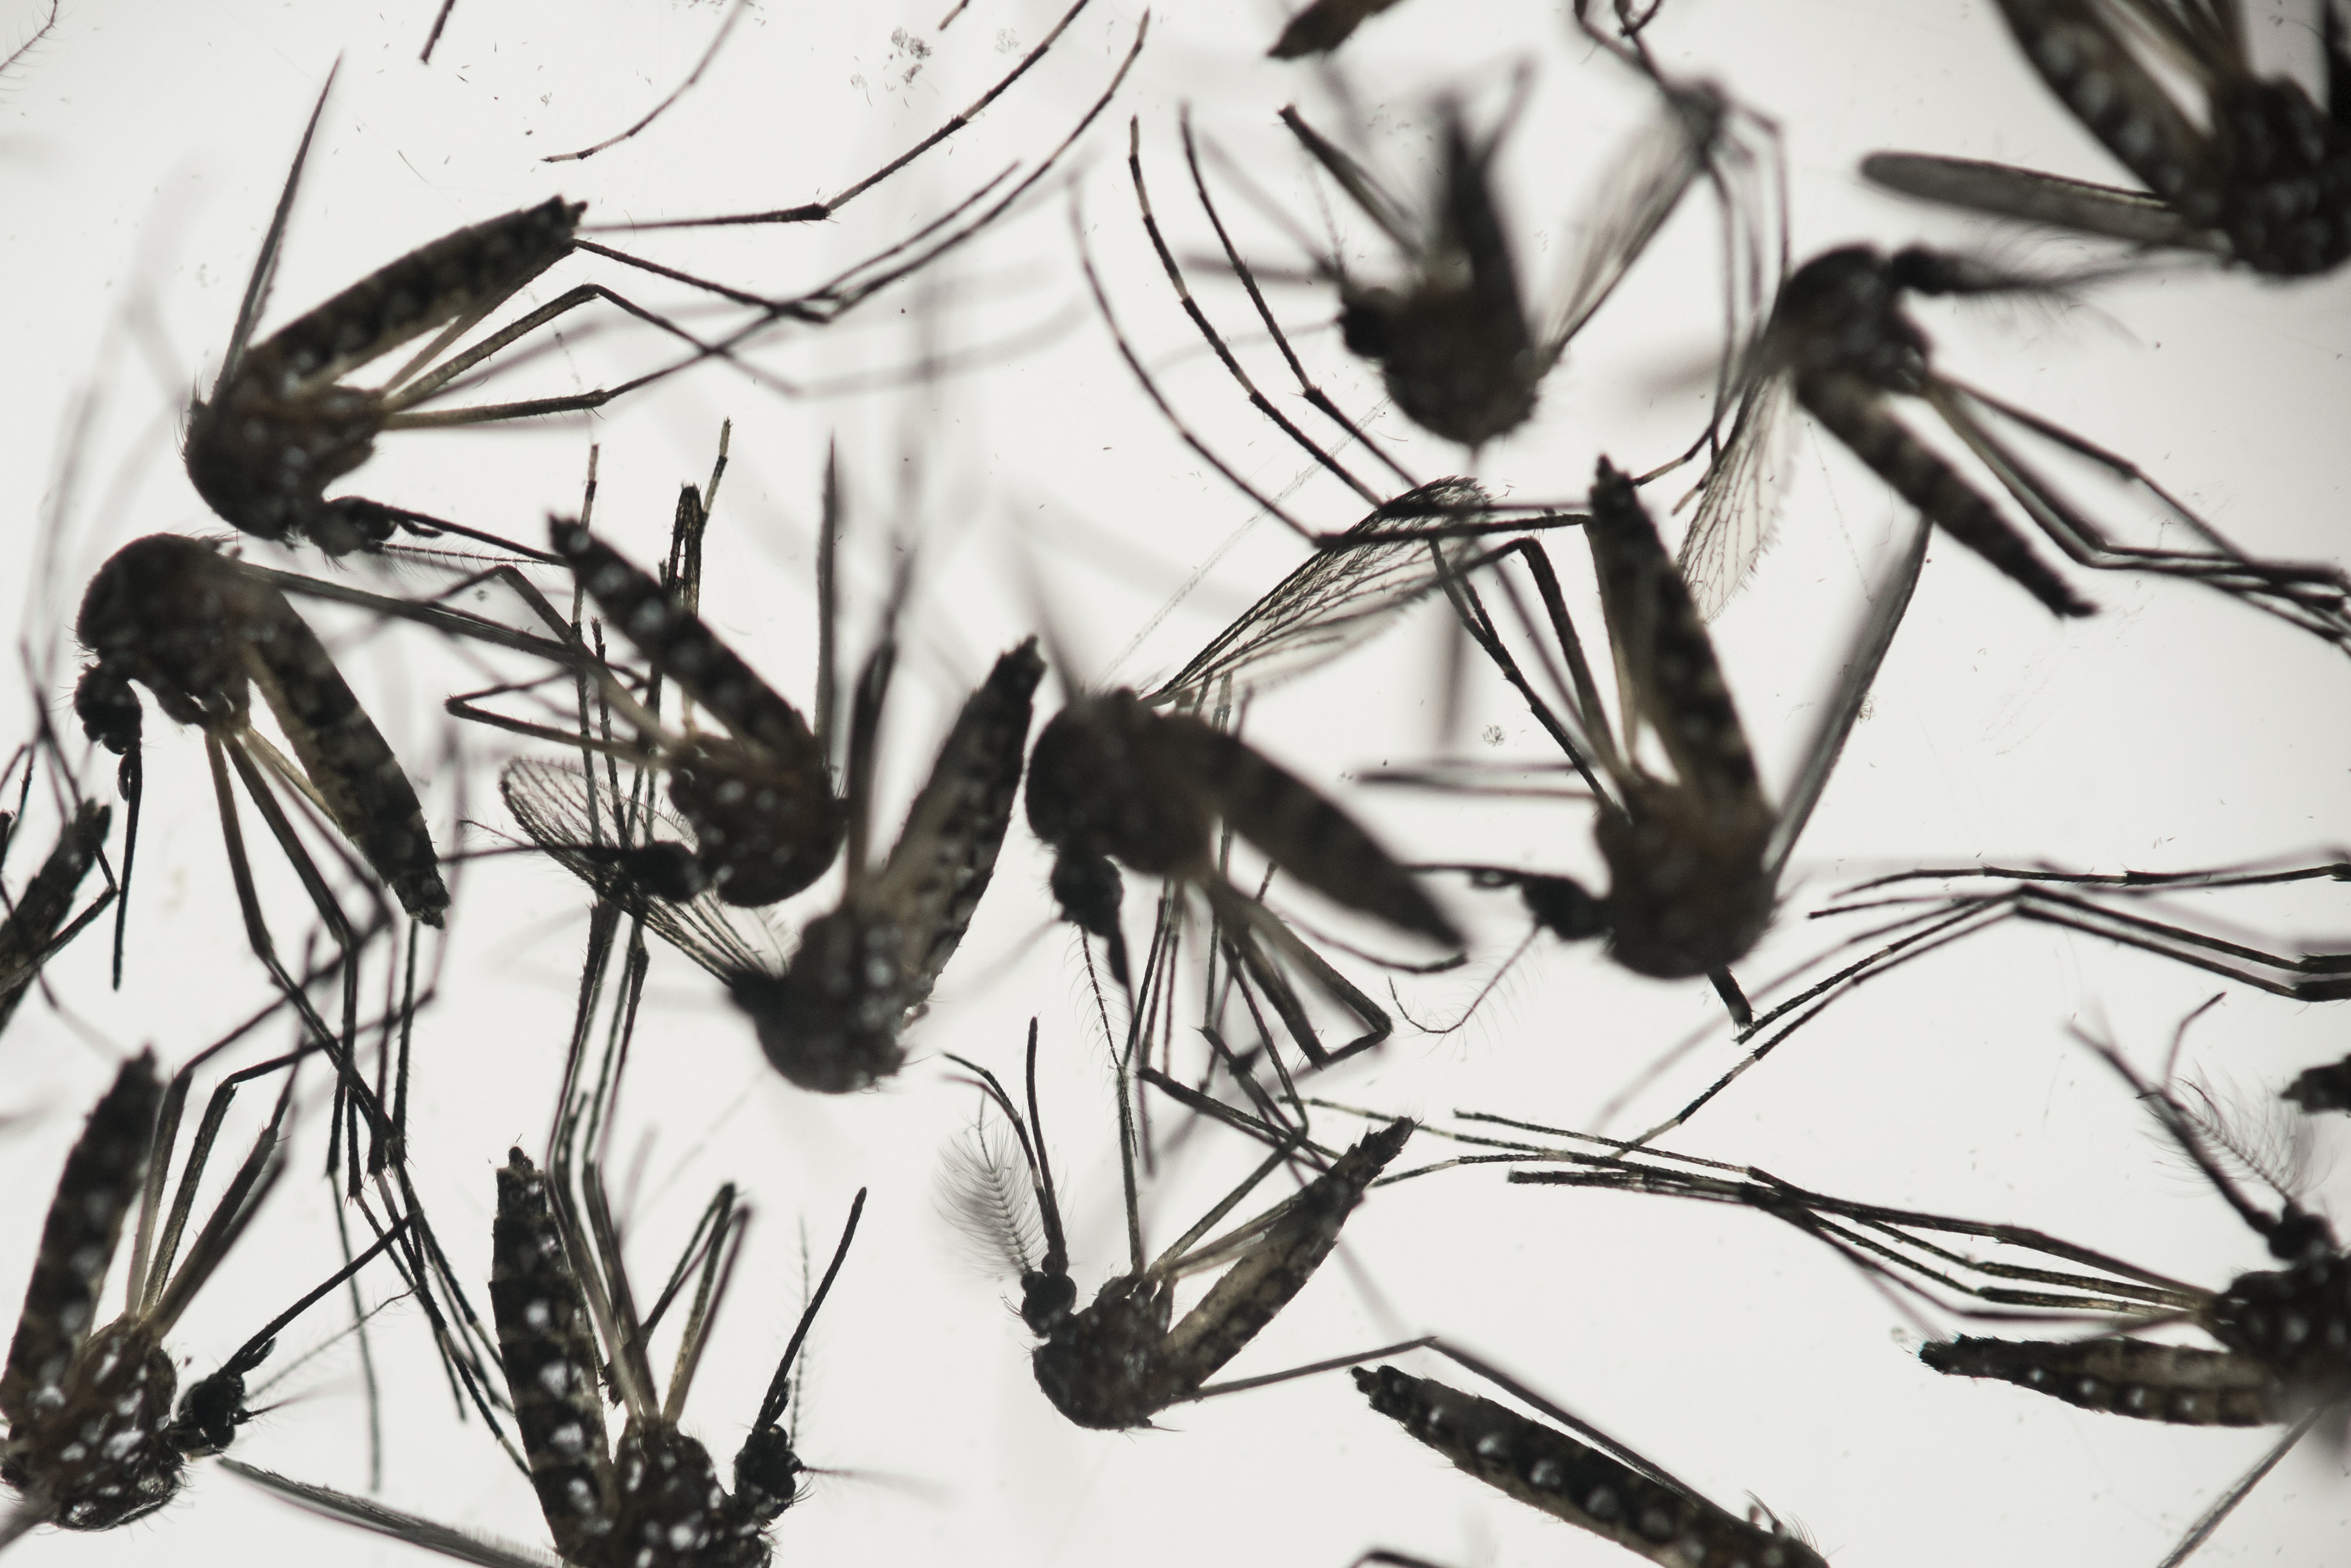 Ssa reporta 141 casos nuevos de zika; suman 927